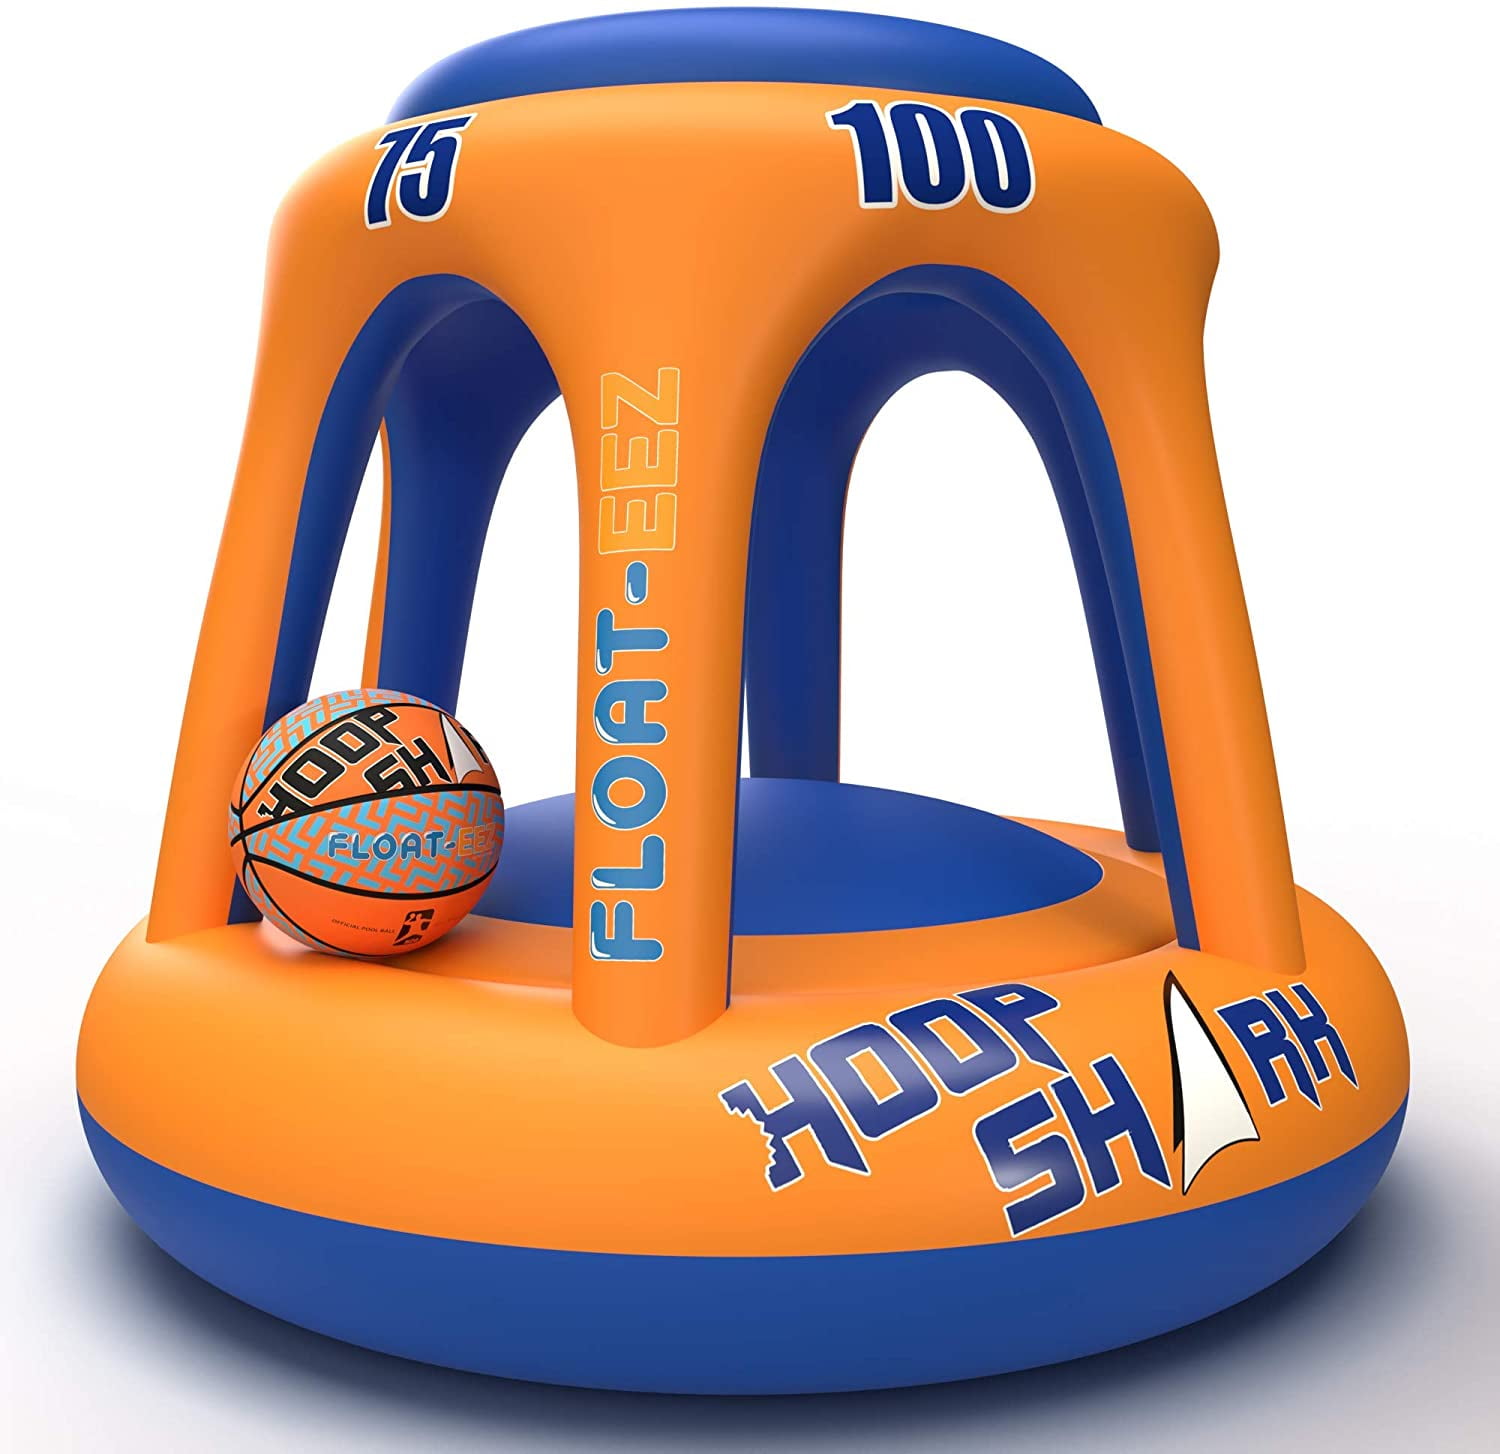 ... Details about   Swimming Pool Basketball Hoop Set by Hoop Shark Orange/Blue 2020 Edition 